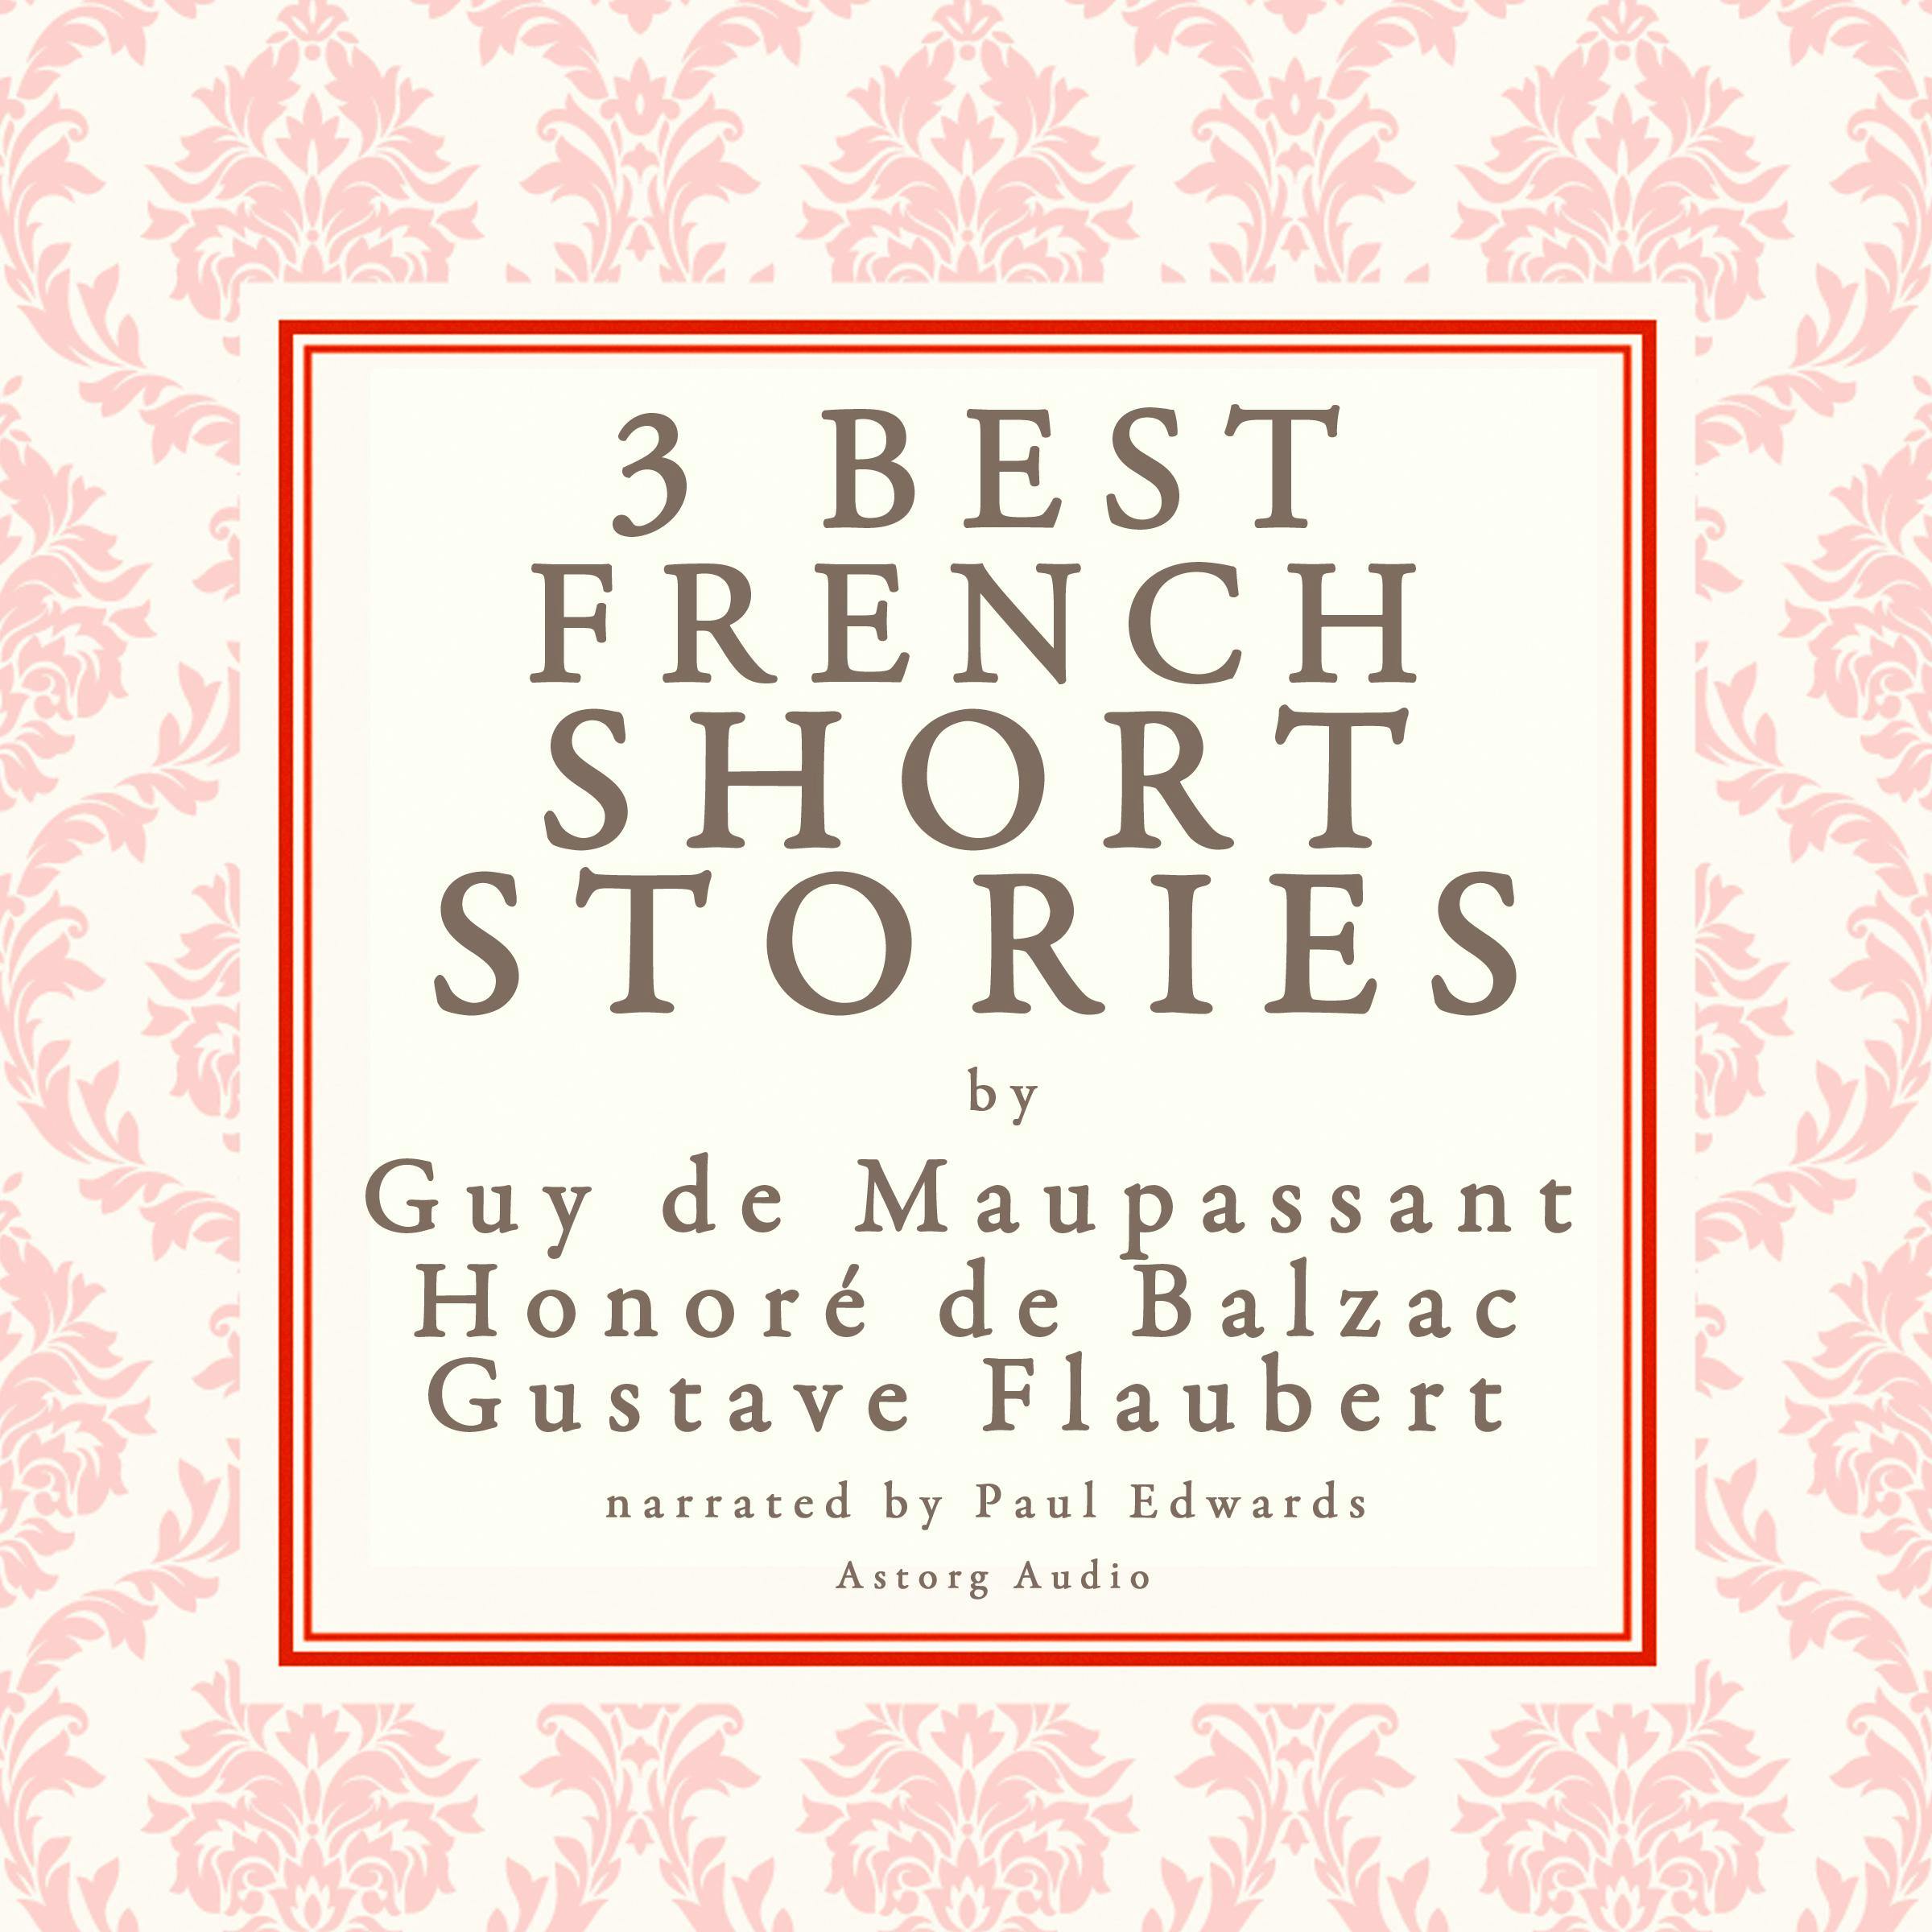 3 Best French Short Stories - Honore de Balzac, Guy de Maupassant, Gustave Flaubert